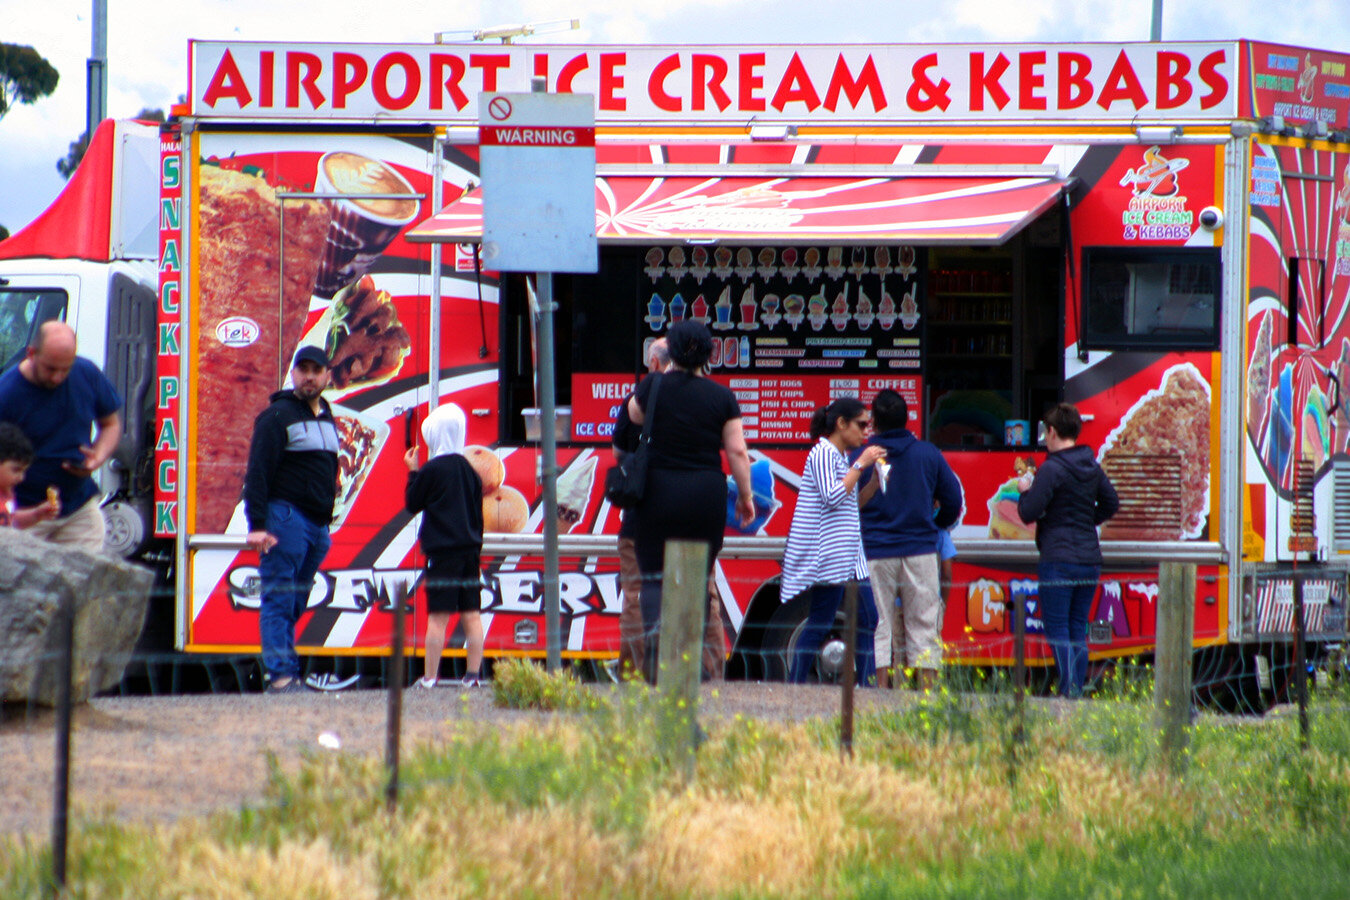 Airport Ice Cream & Kebabs